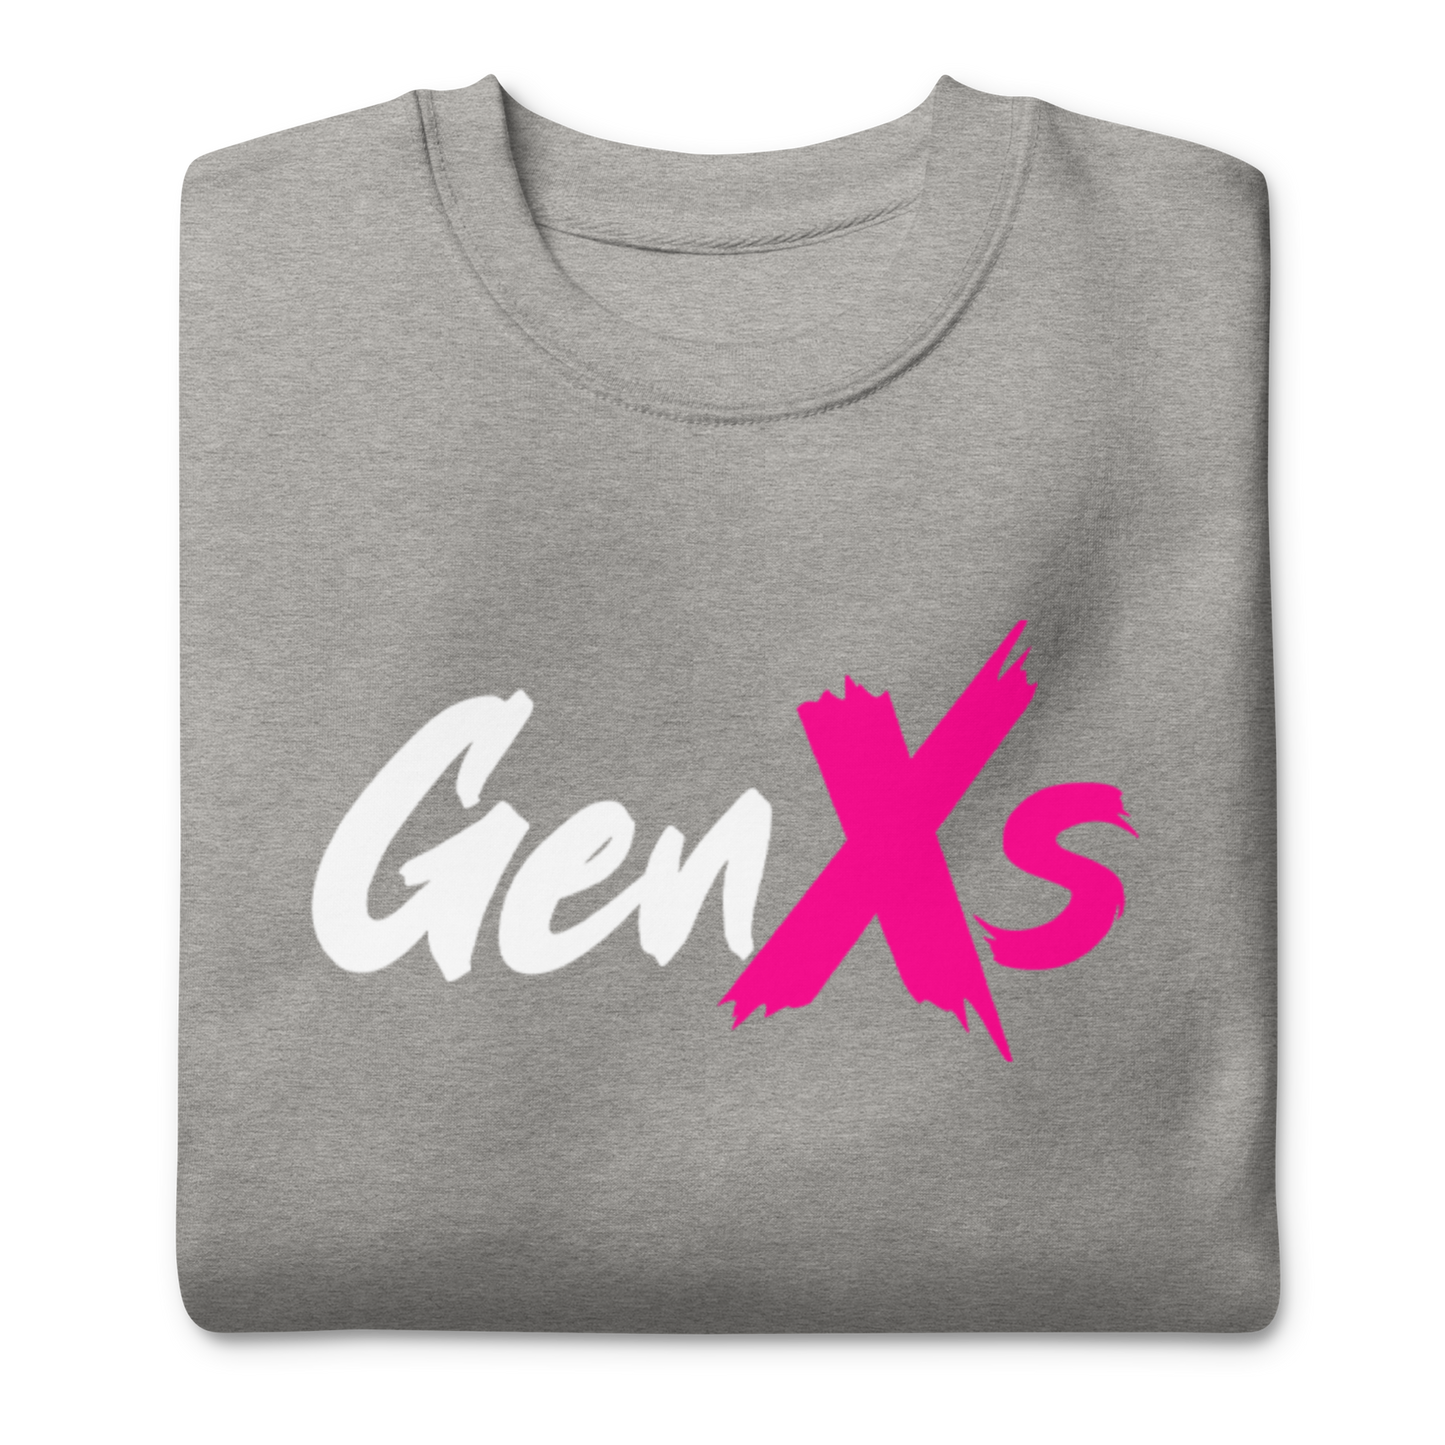 GenXs Unisex Premium Sweatshirt